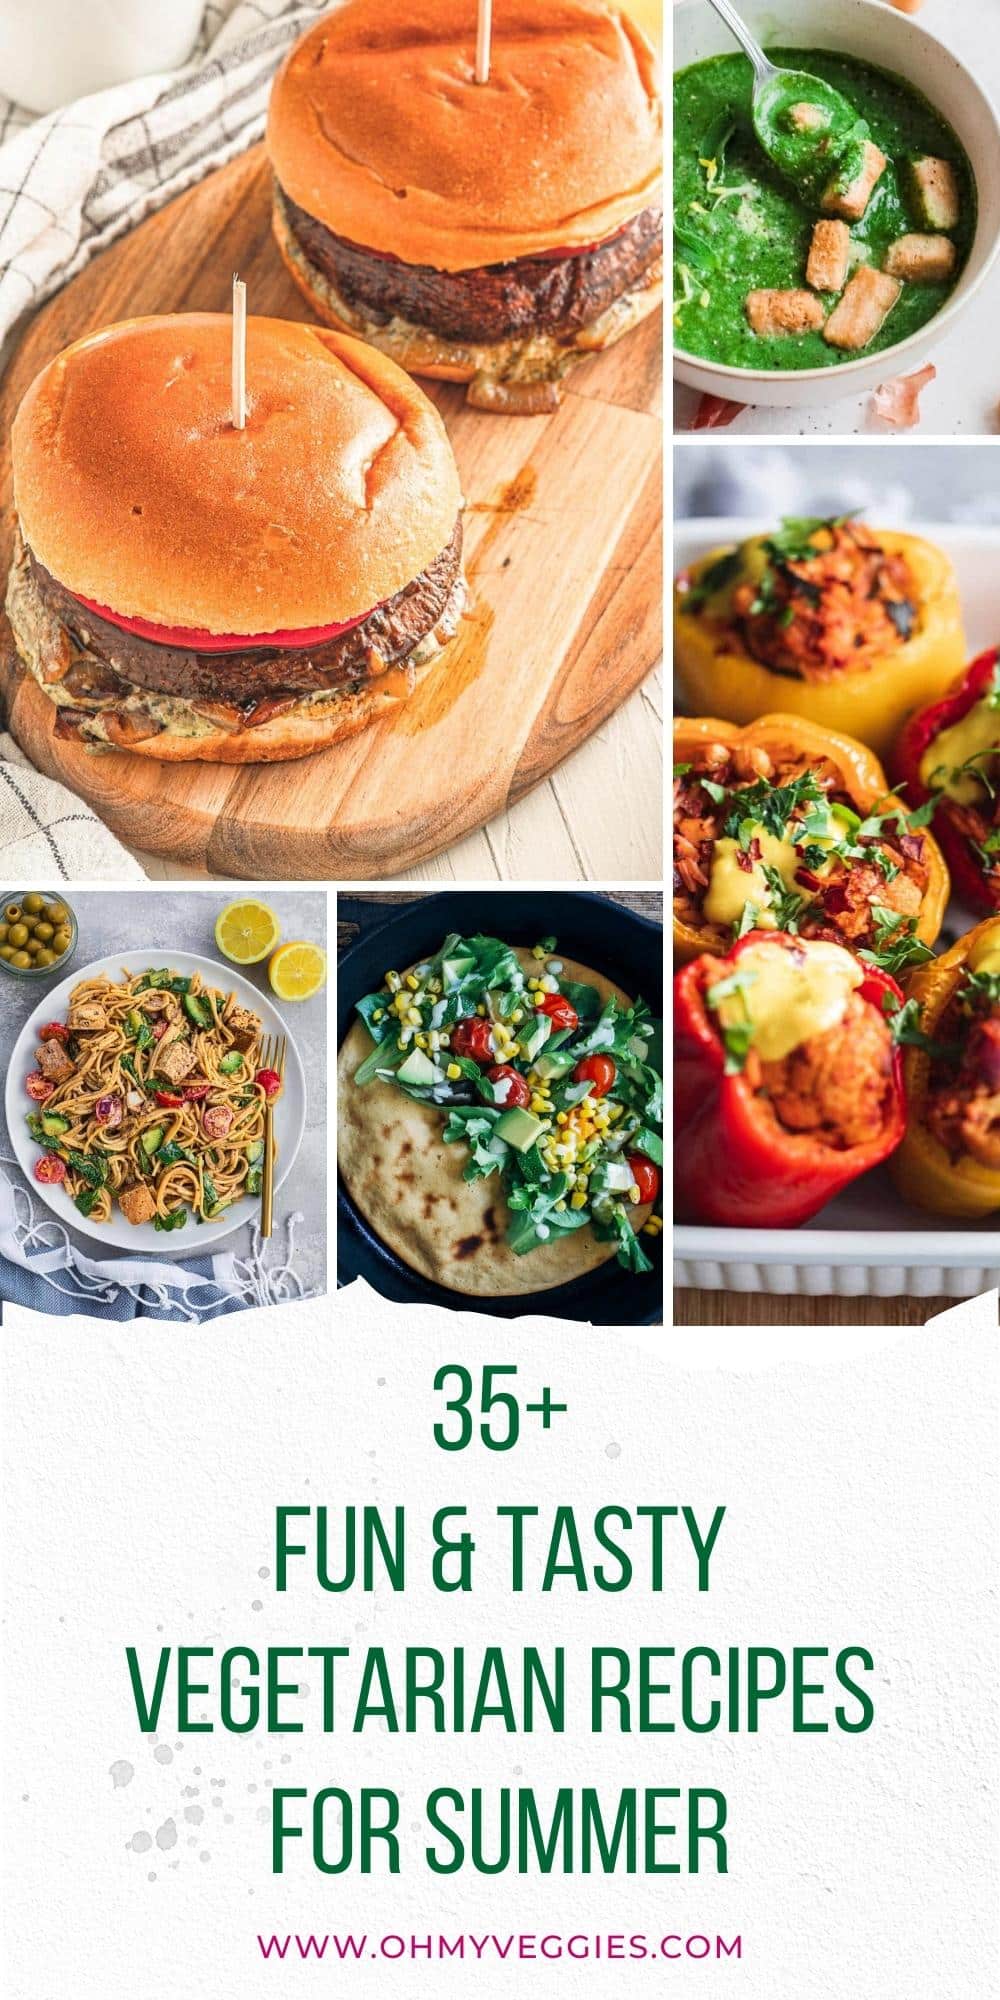 35+ Fun & Tasty Vegetarian Recipes for Summer - Oh My Veggies